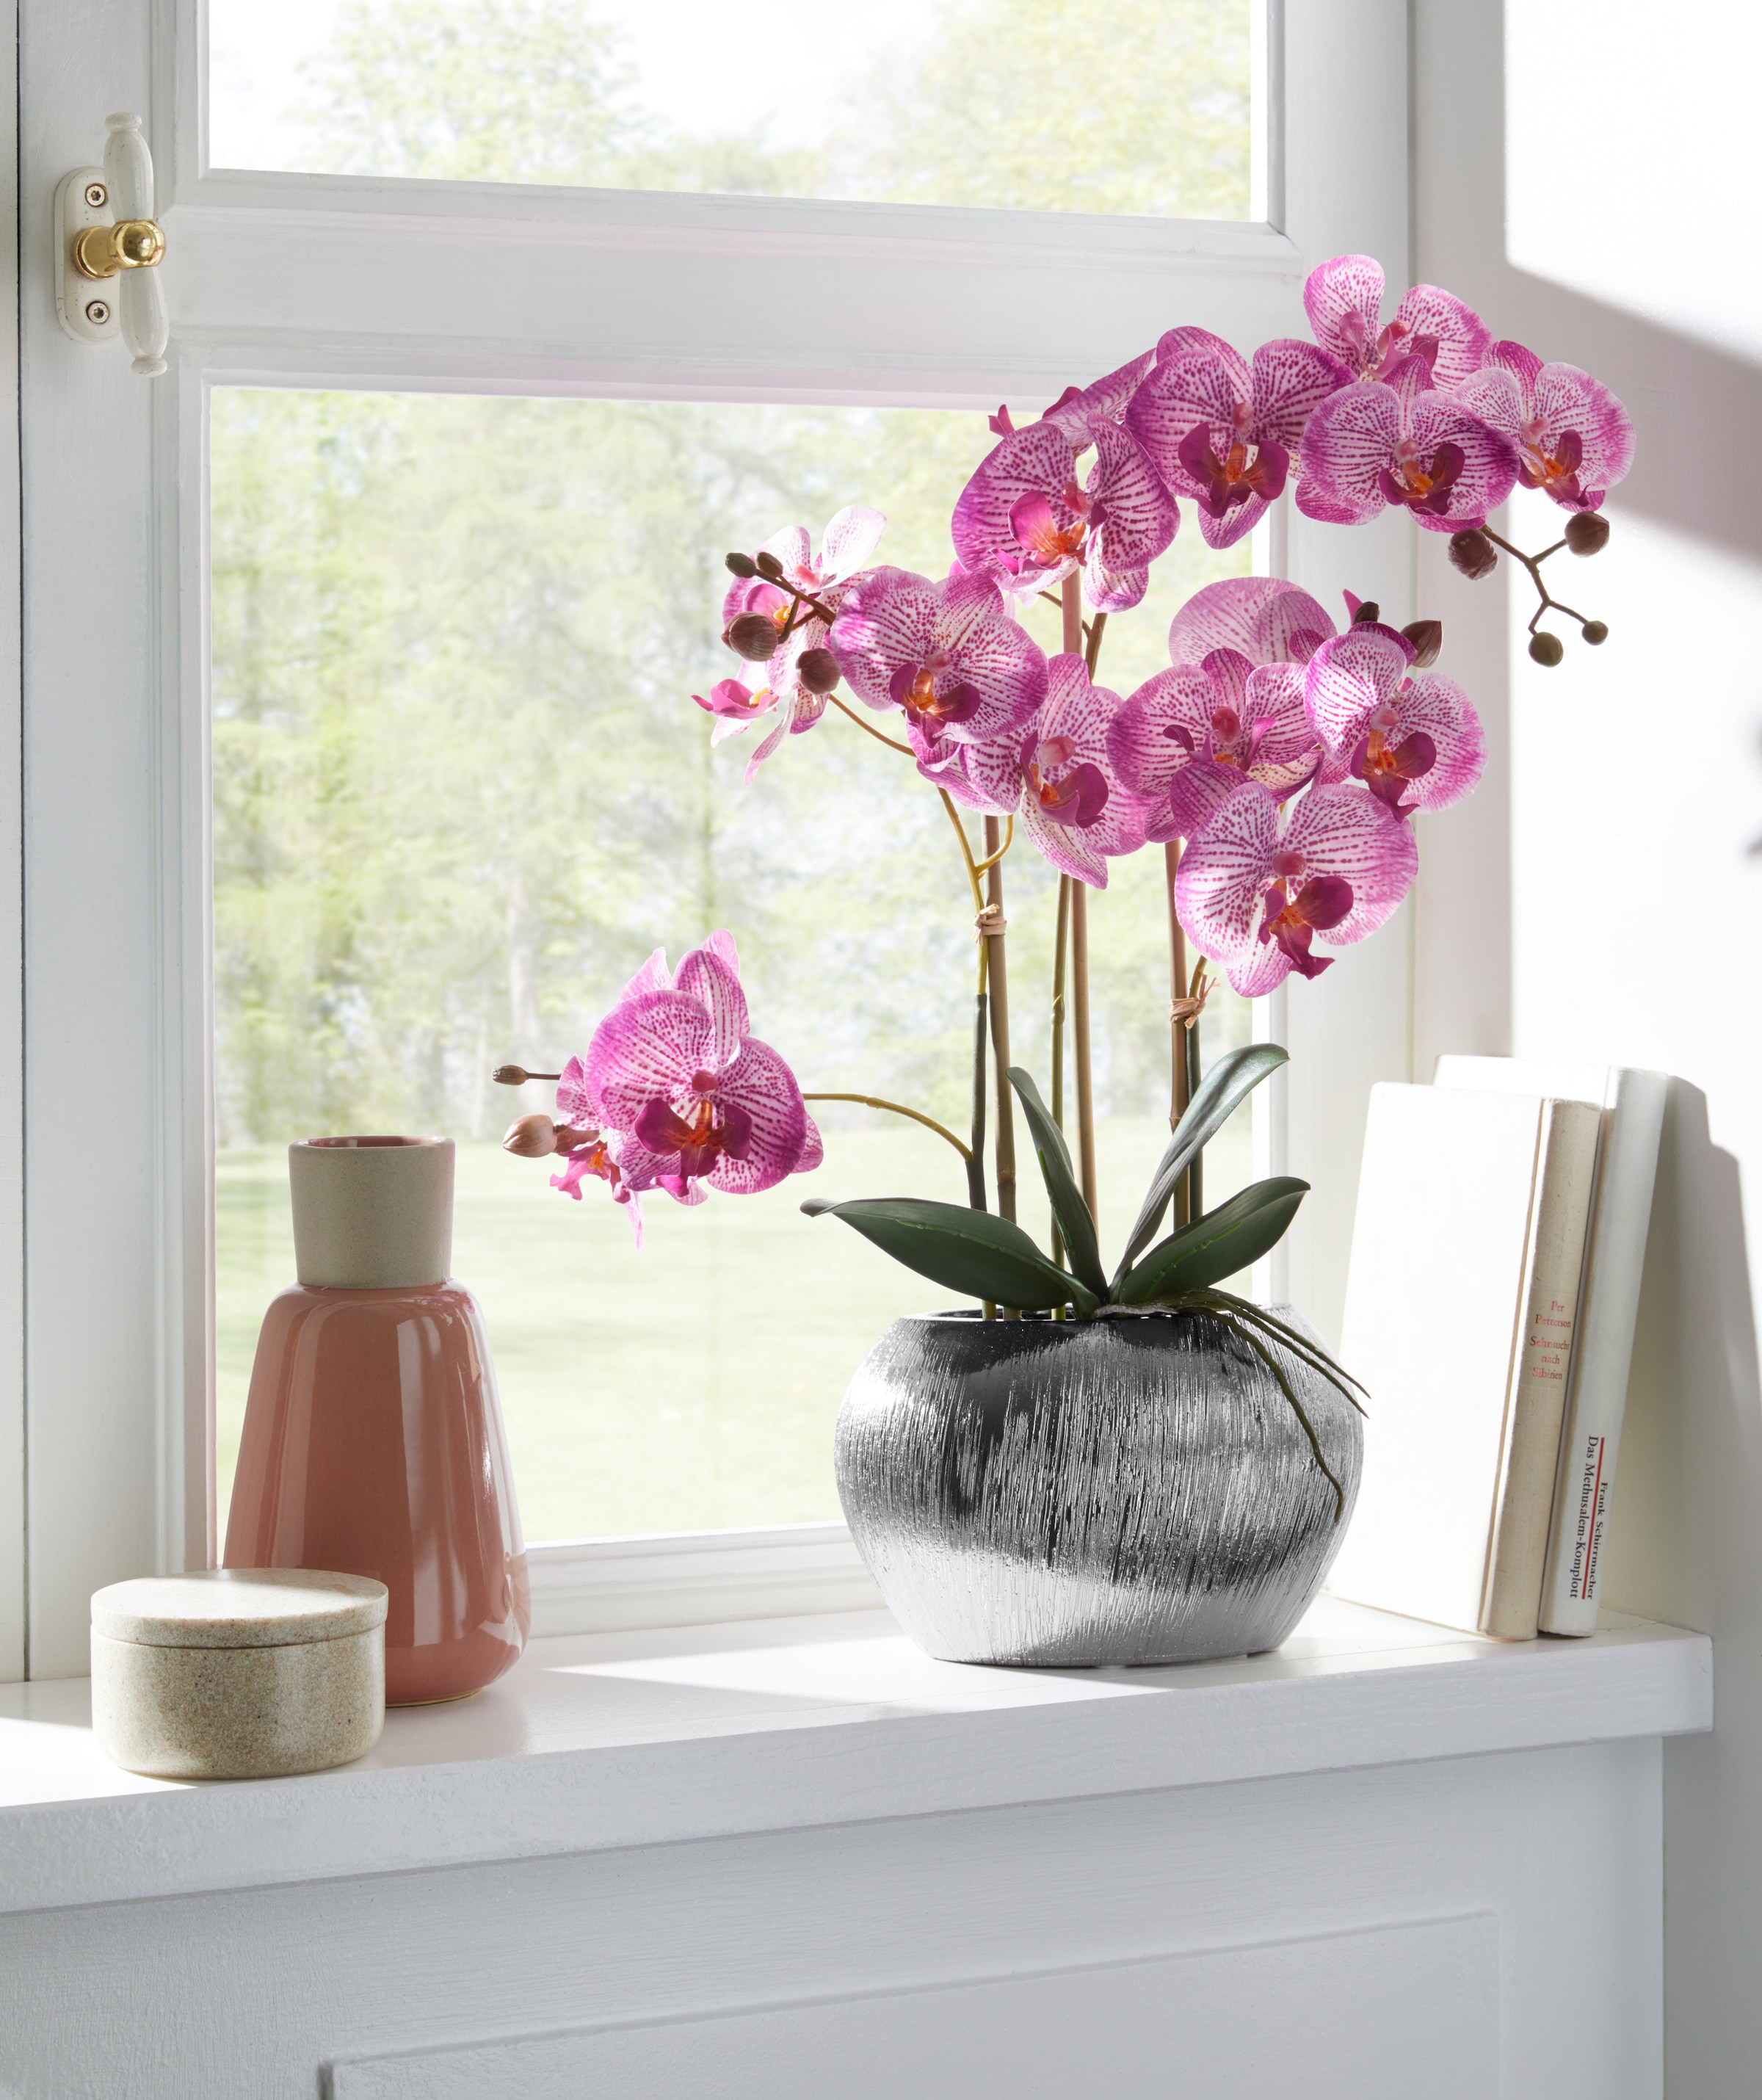 Home affaire Kunstpflanze »Orchidee«, Kunstorchidee, im Topf